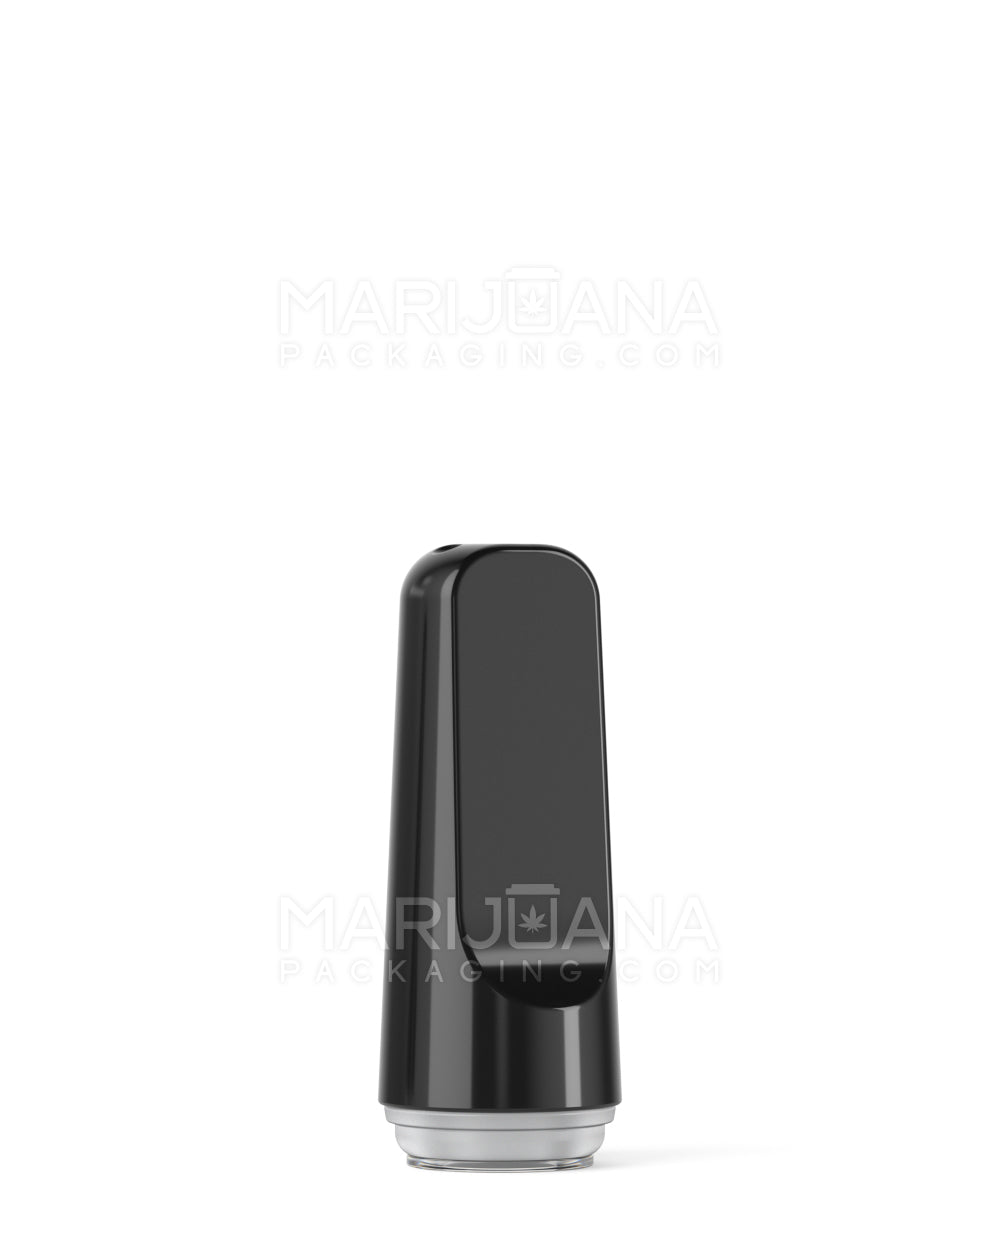 RAE | Flat Vape Mouthpiece for Hand Press Plastic Cartridges | Black Plastic - Hand Press - 400 Count - 2